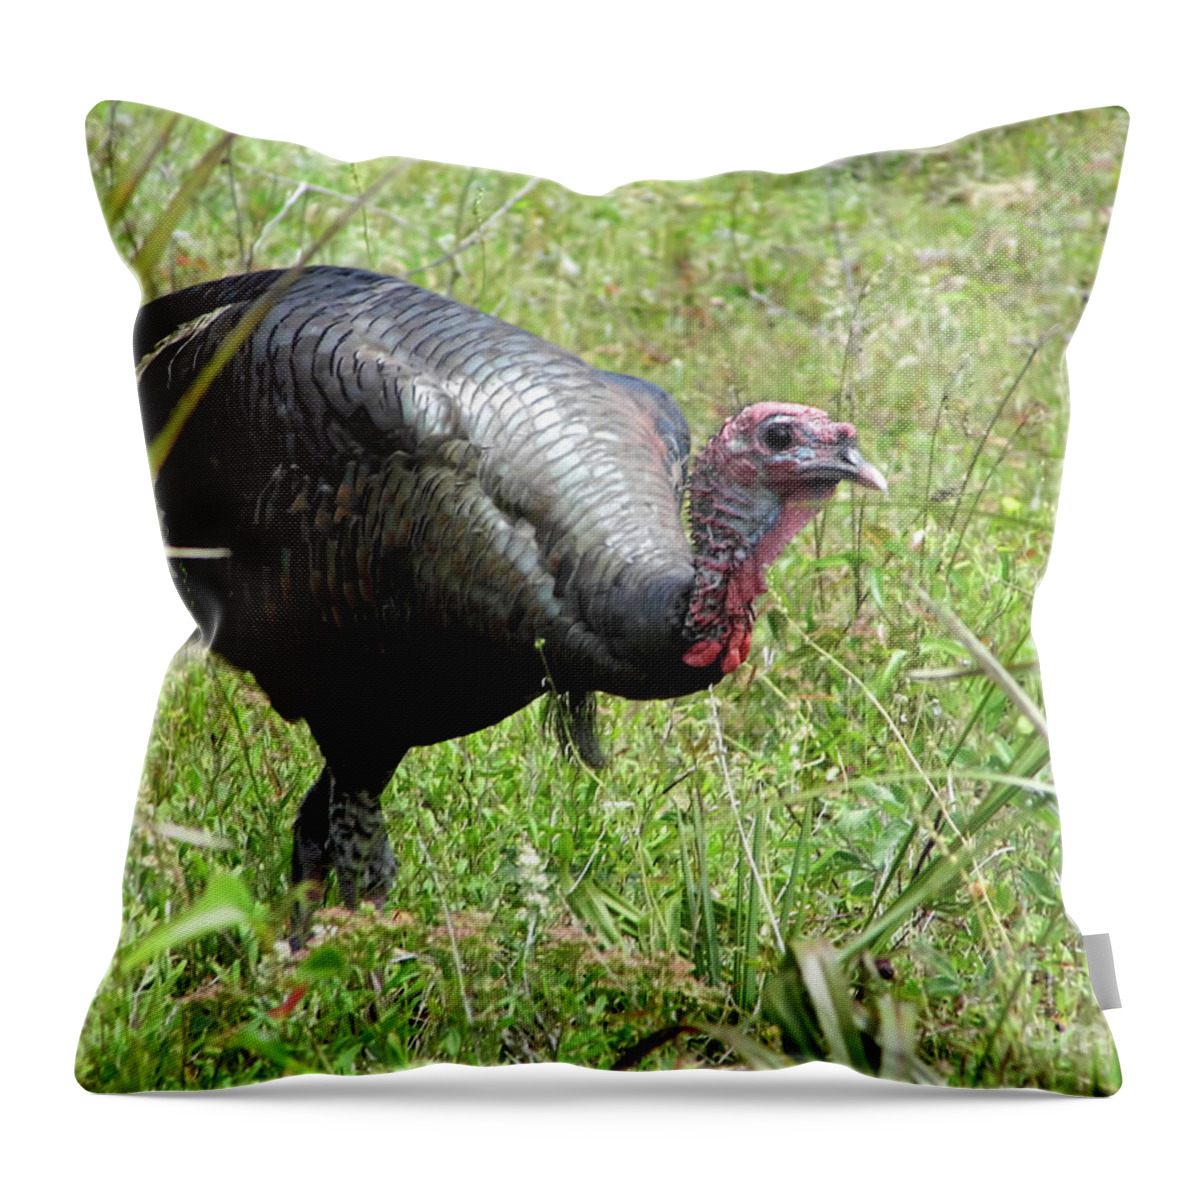 Turkey Throw Pillow featuring the photograph Gobbler by D Hackett